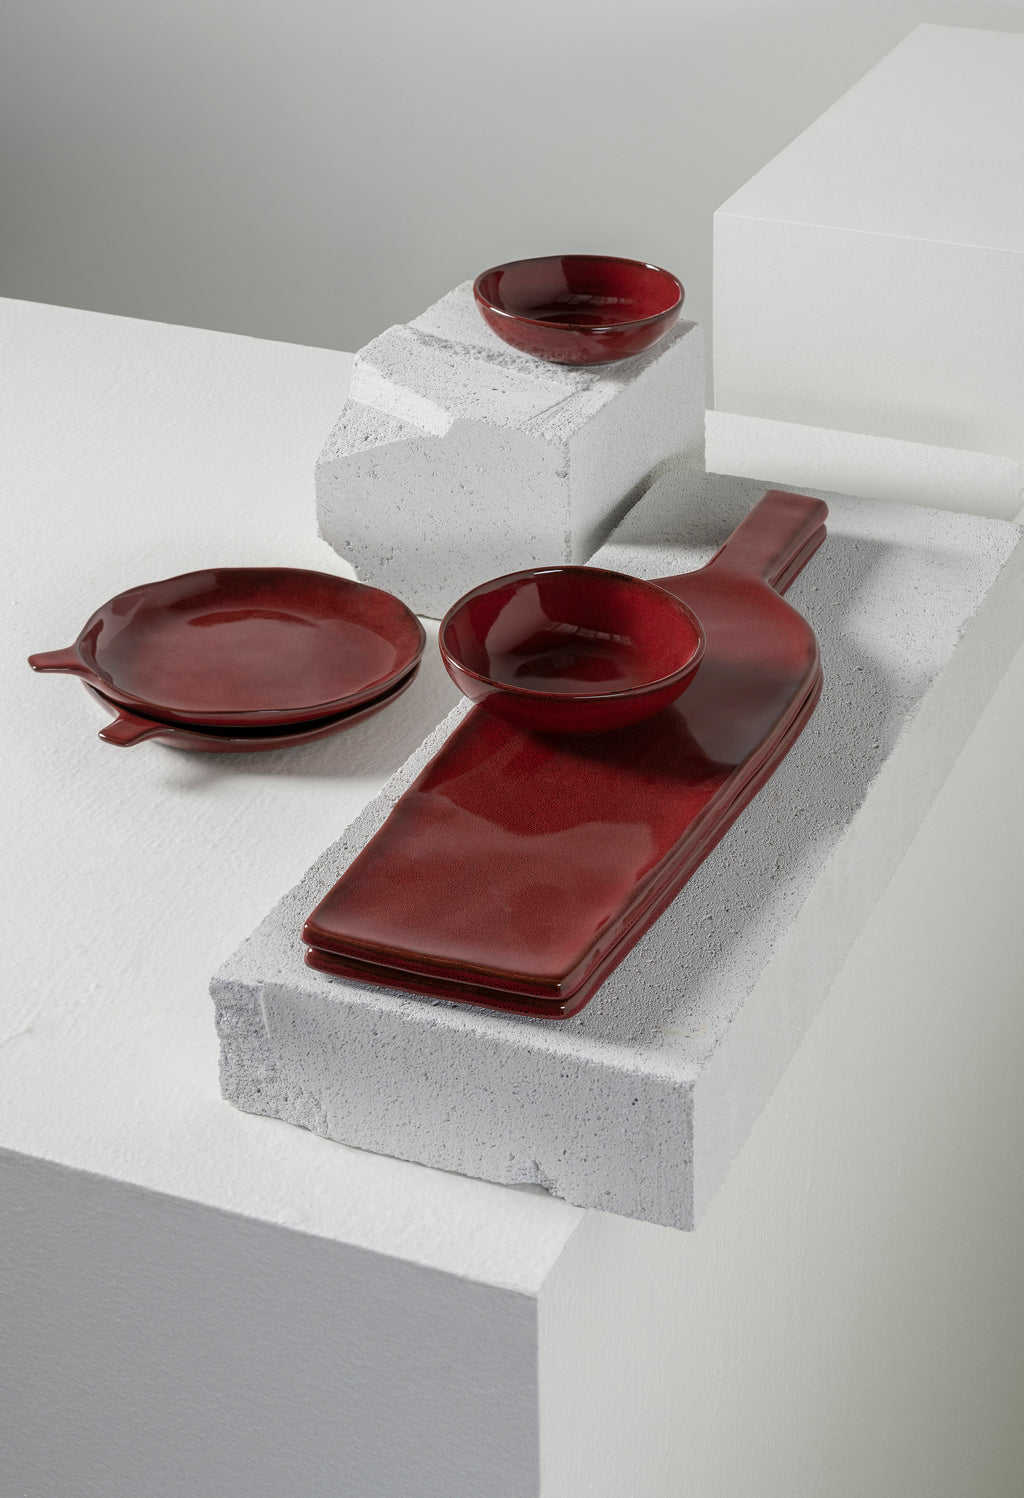 Apero set 12 pieces - La Mère tableware by Marie Michielssen - venetian red